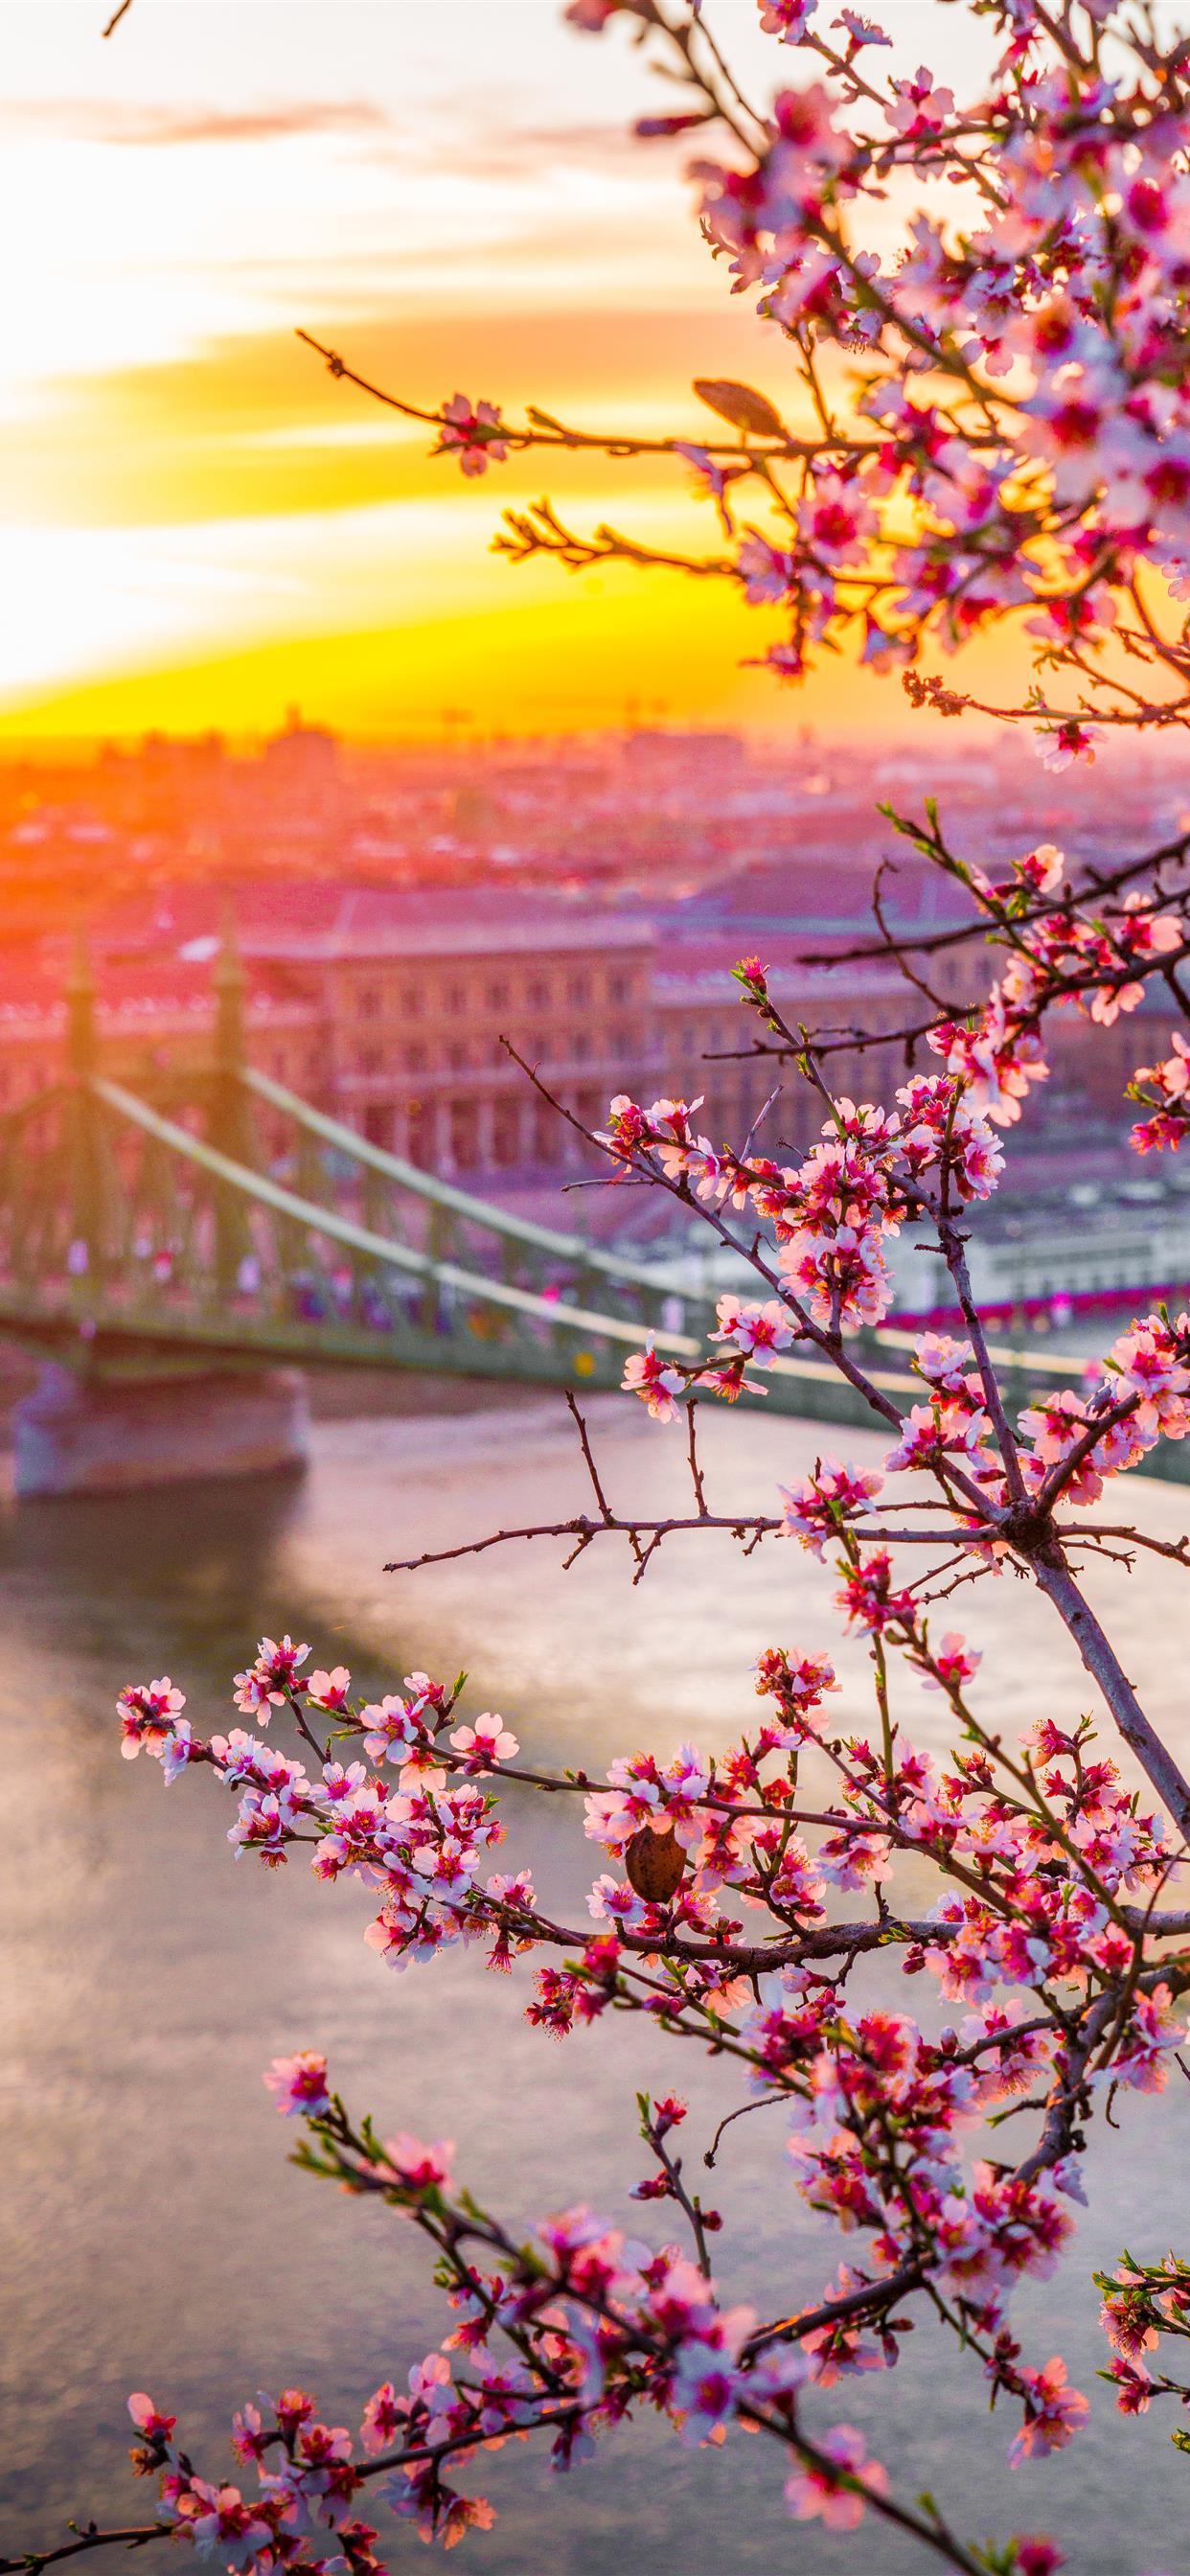 Liberty bridge in Hungary Spring edition iPhone X Wallpaper Free